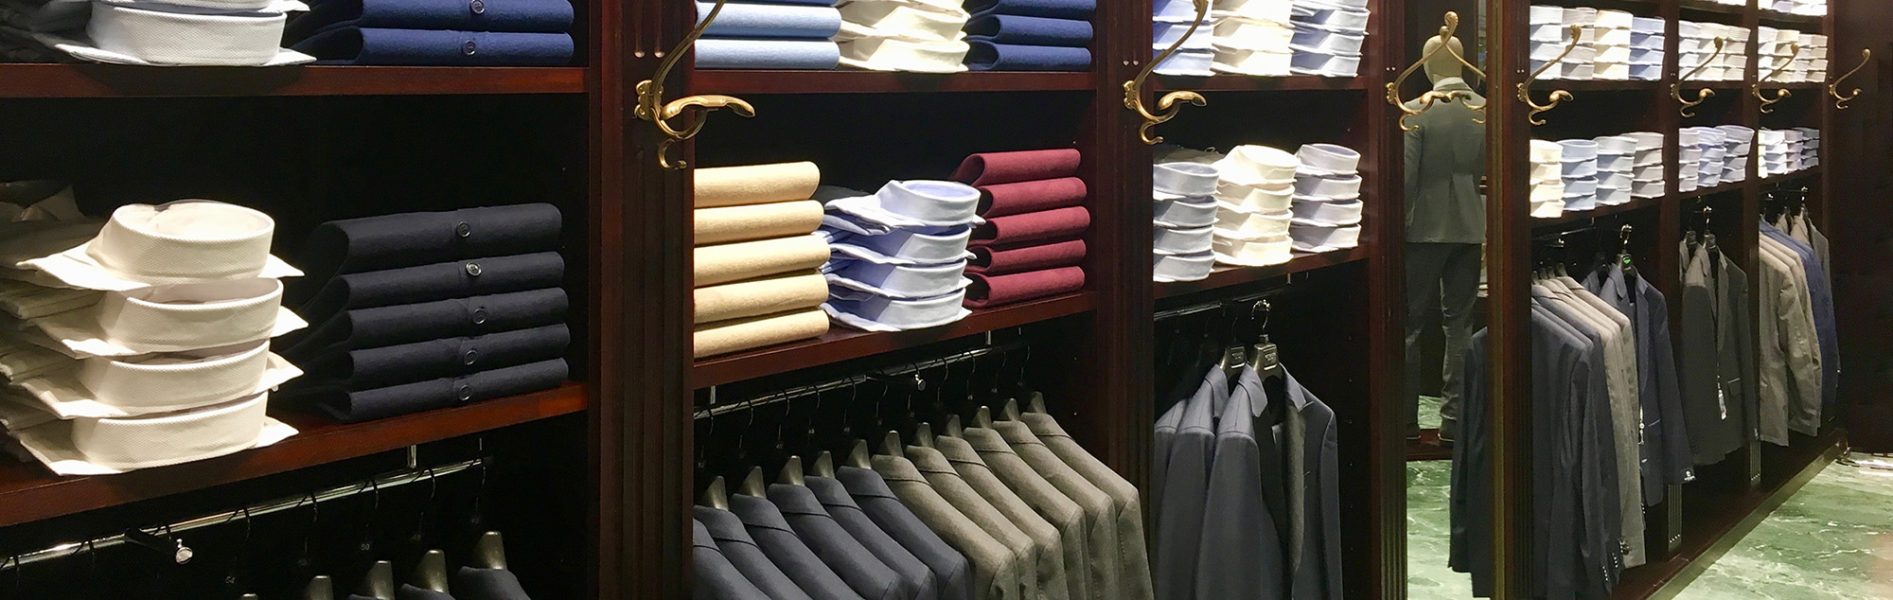 Shelves of Clothing